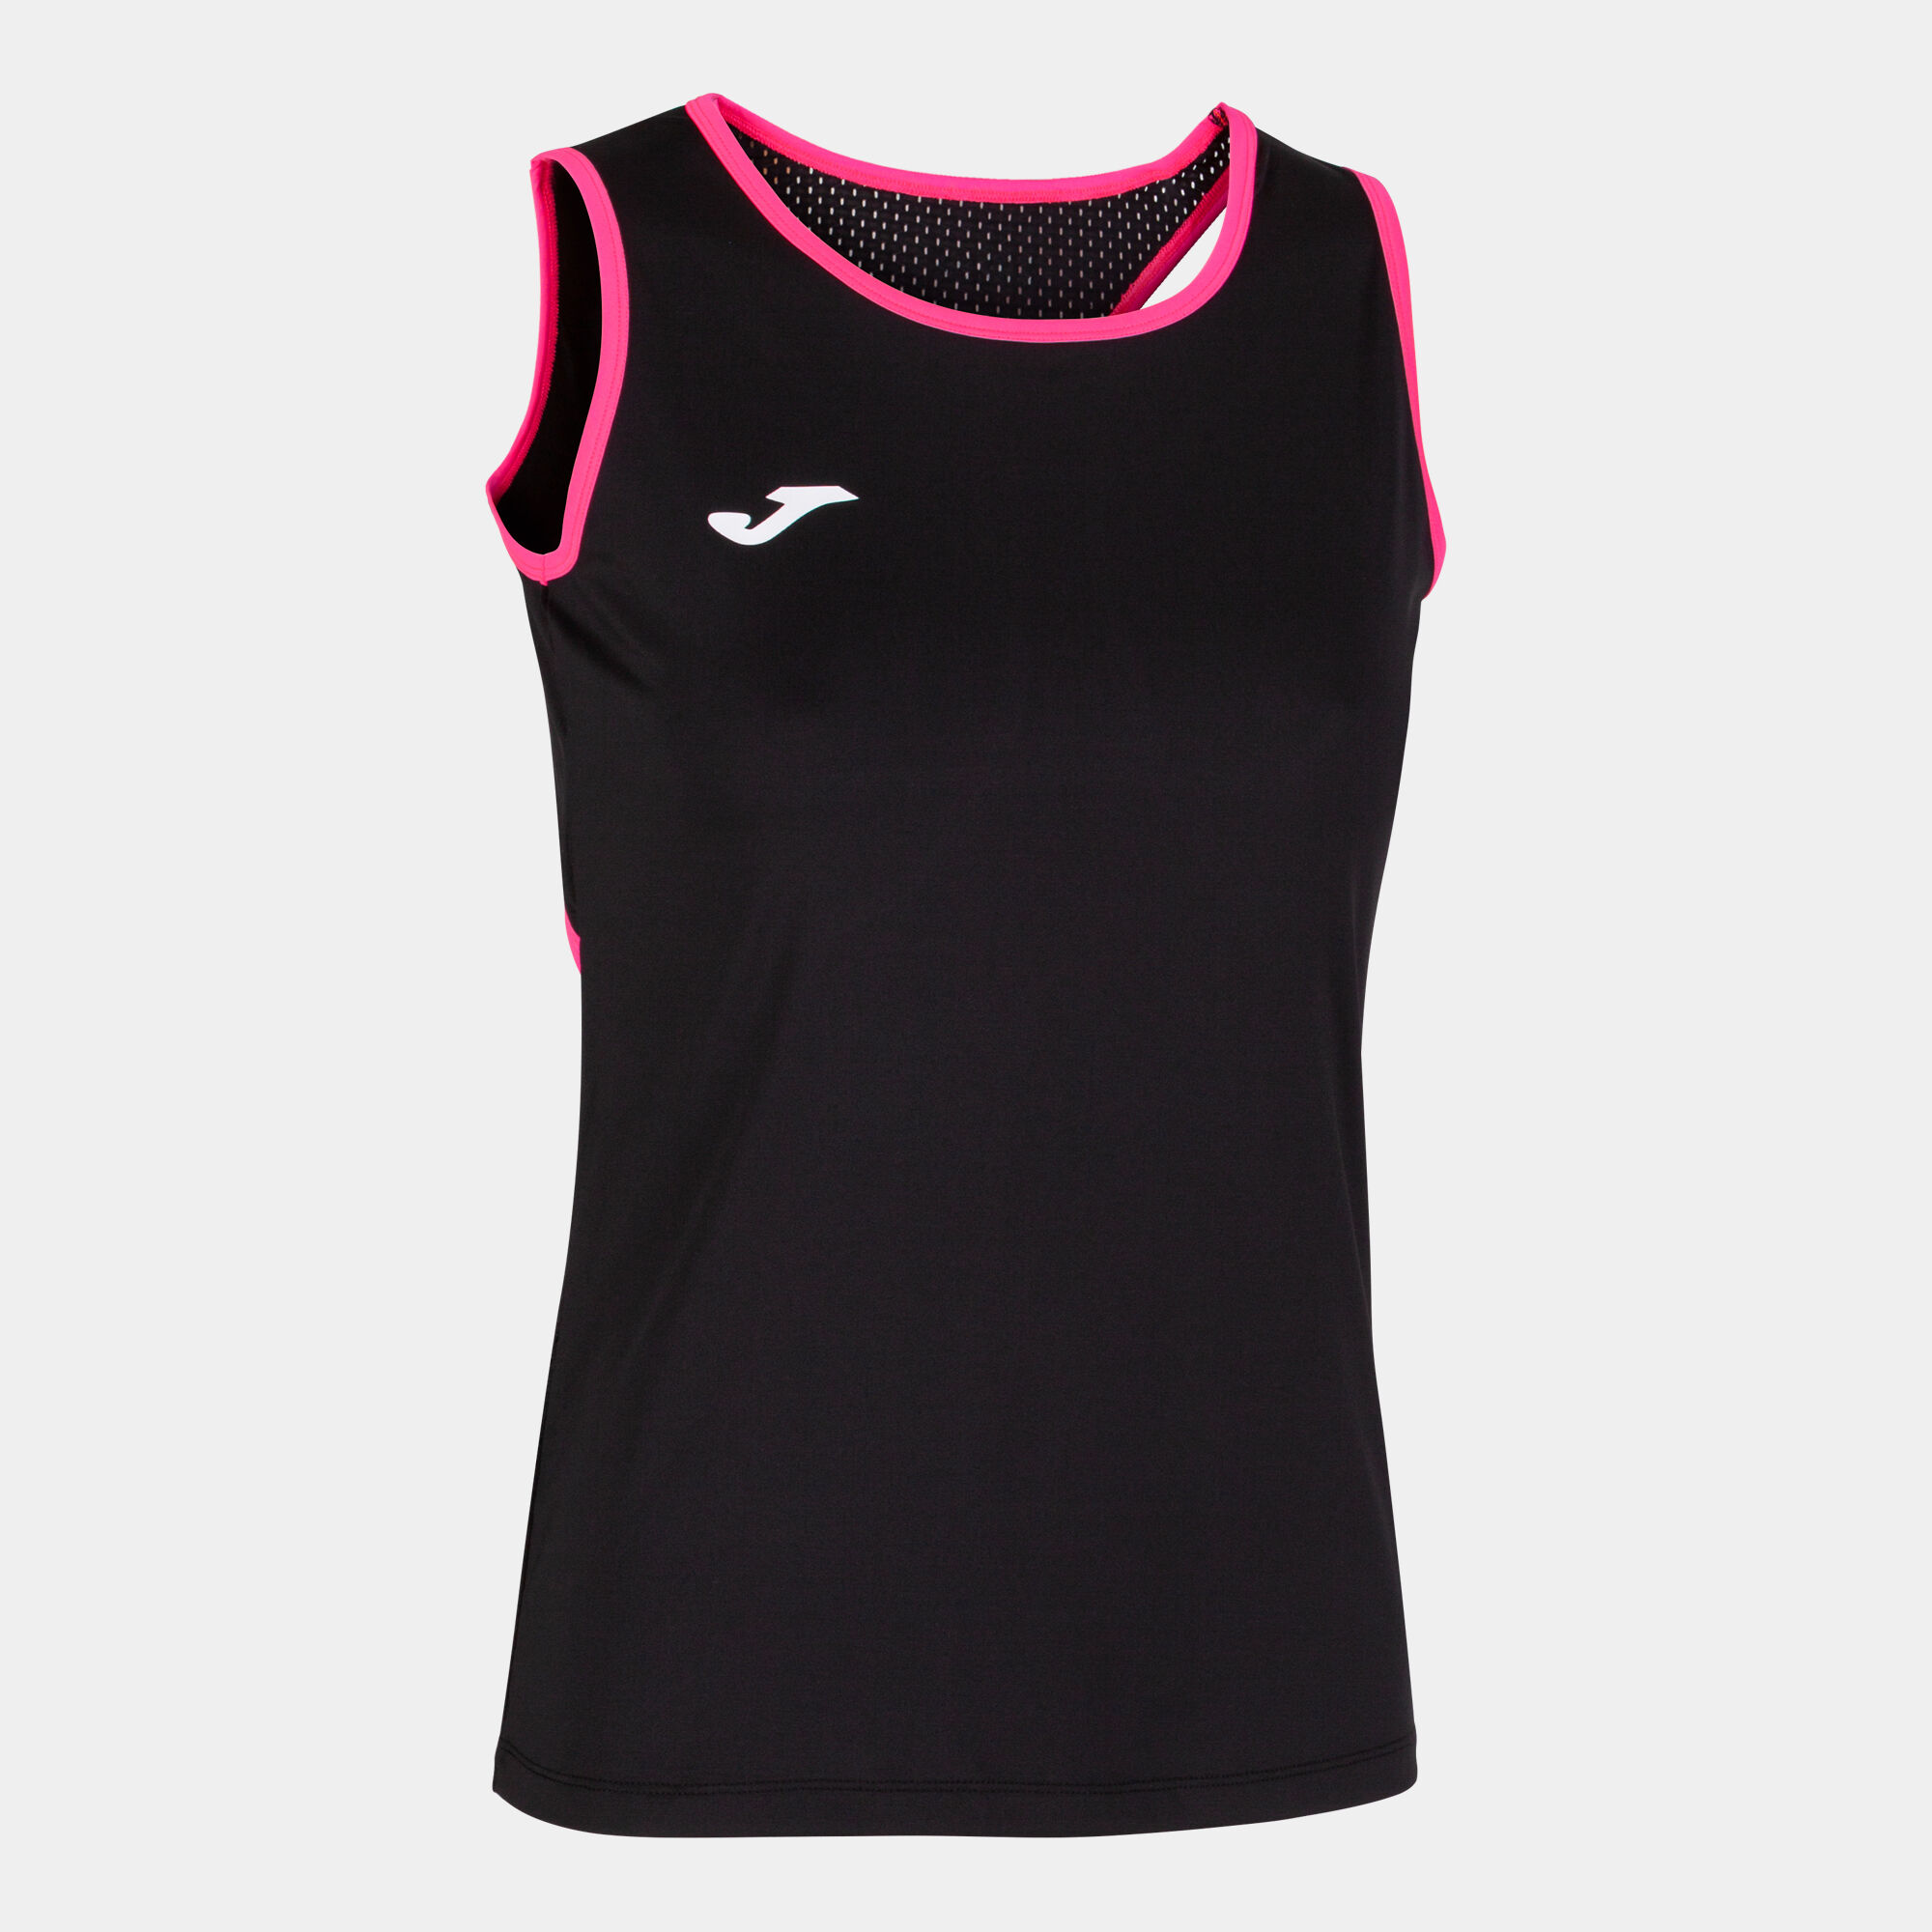 T-shirt de alça mulher Break preto rosa fluorescente